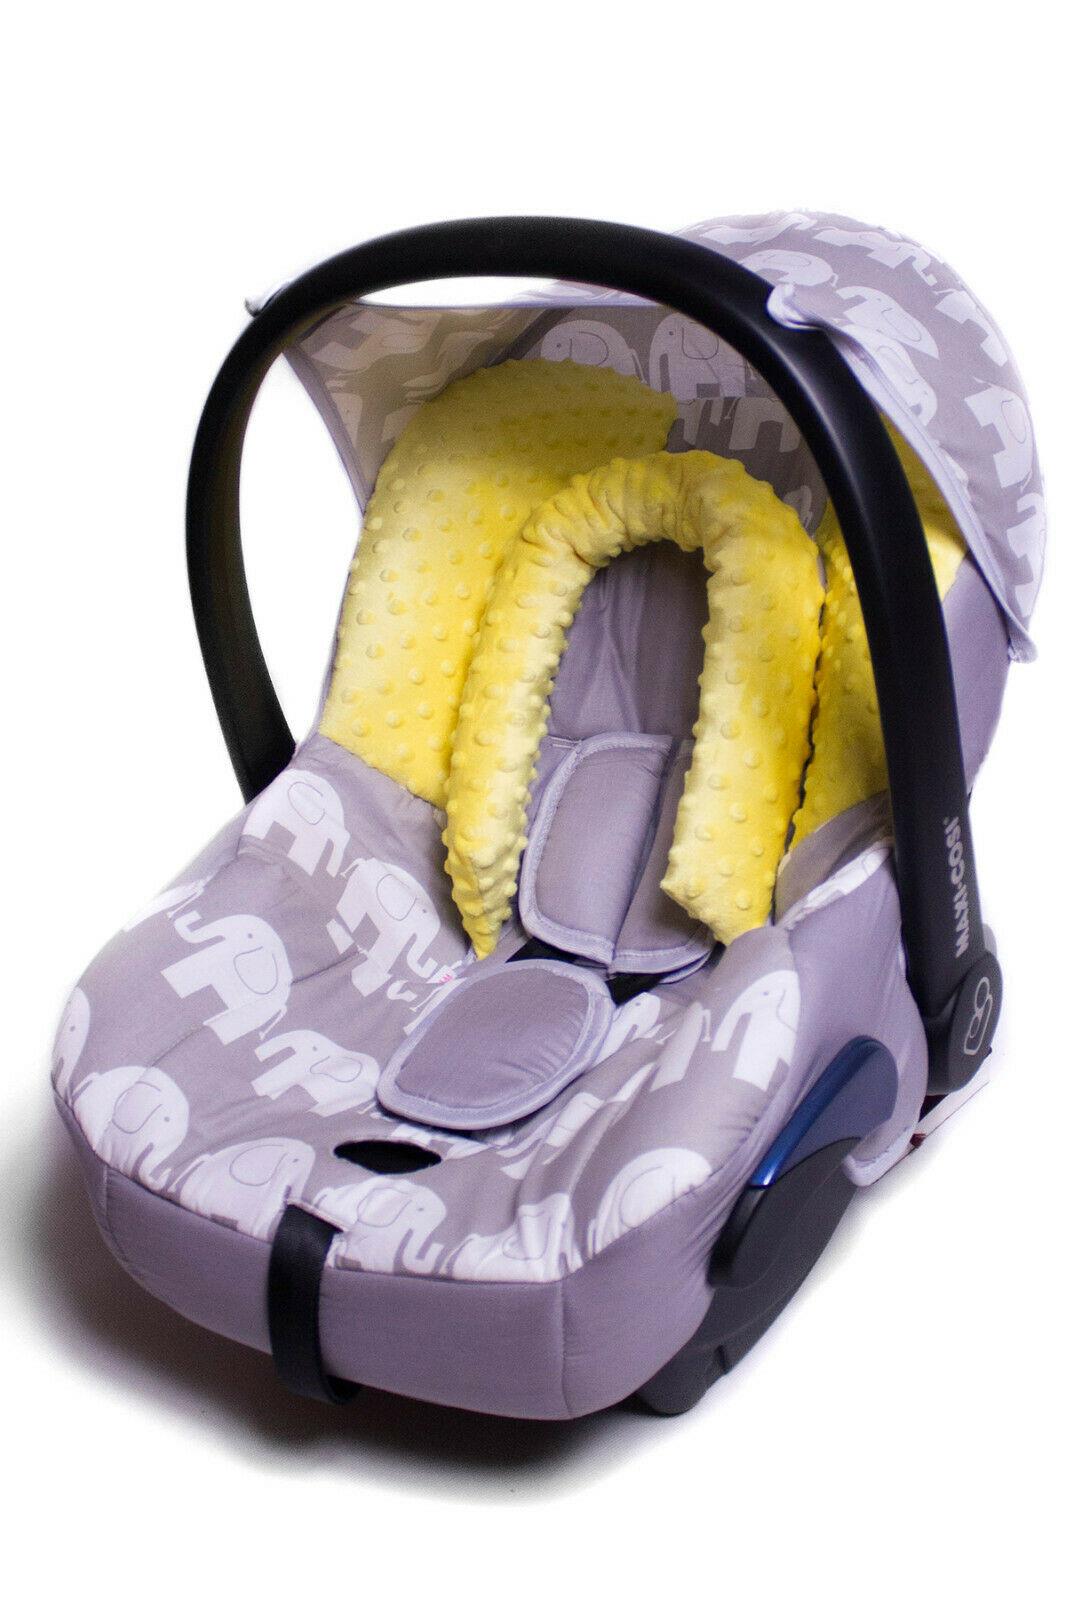 Full Cover Set Fitting Maxi Cosi Cabriofix Baby Car Seat - Elephants Grey / Yellow